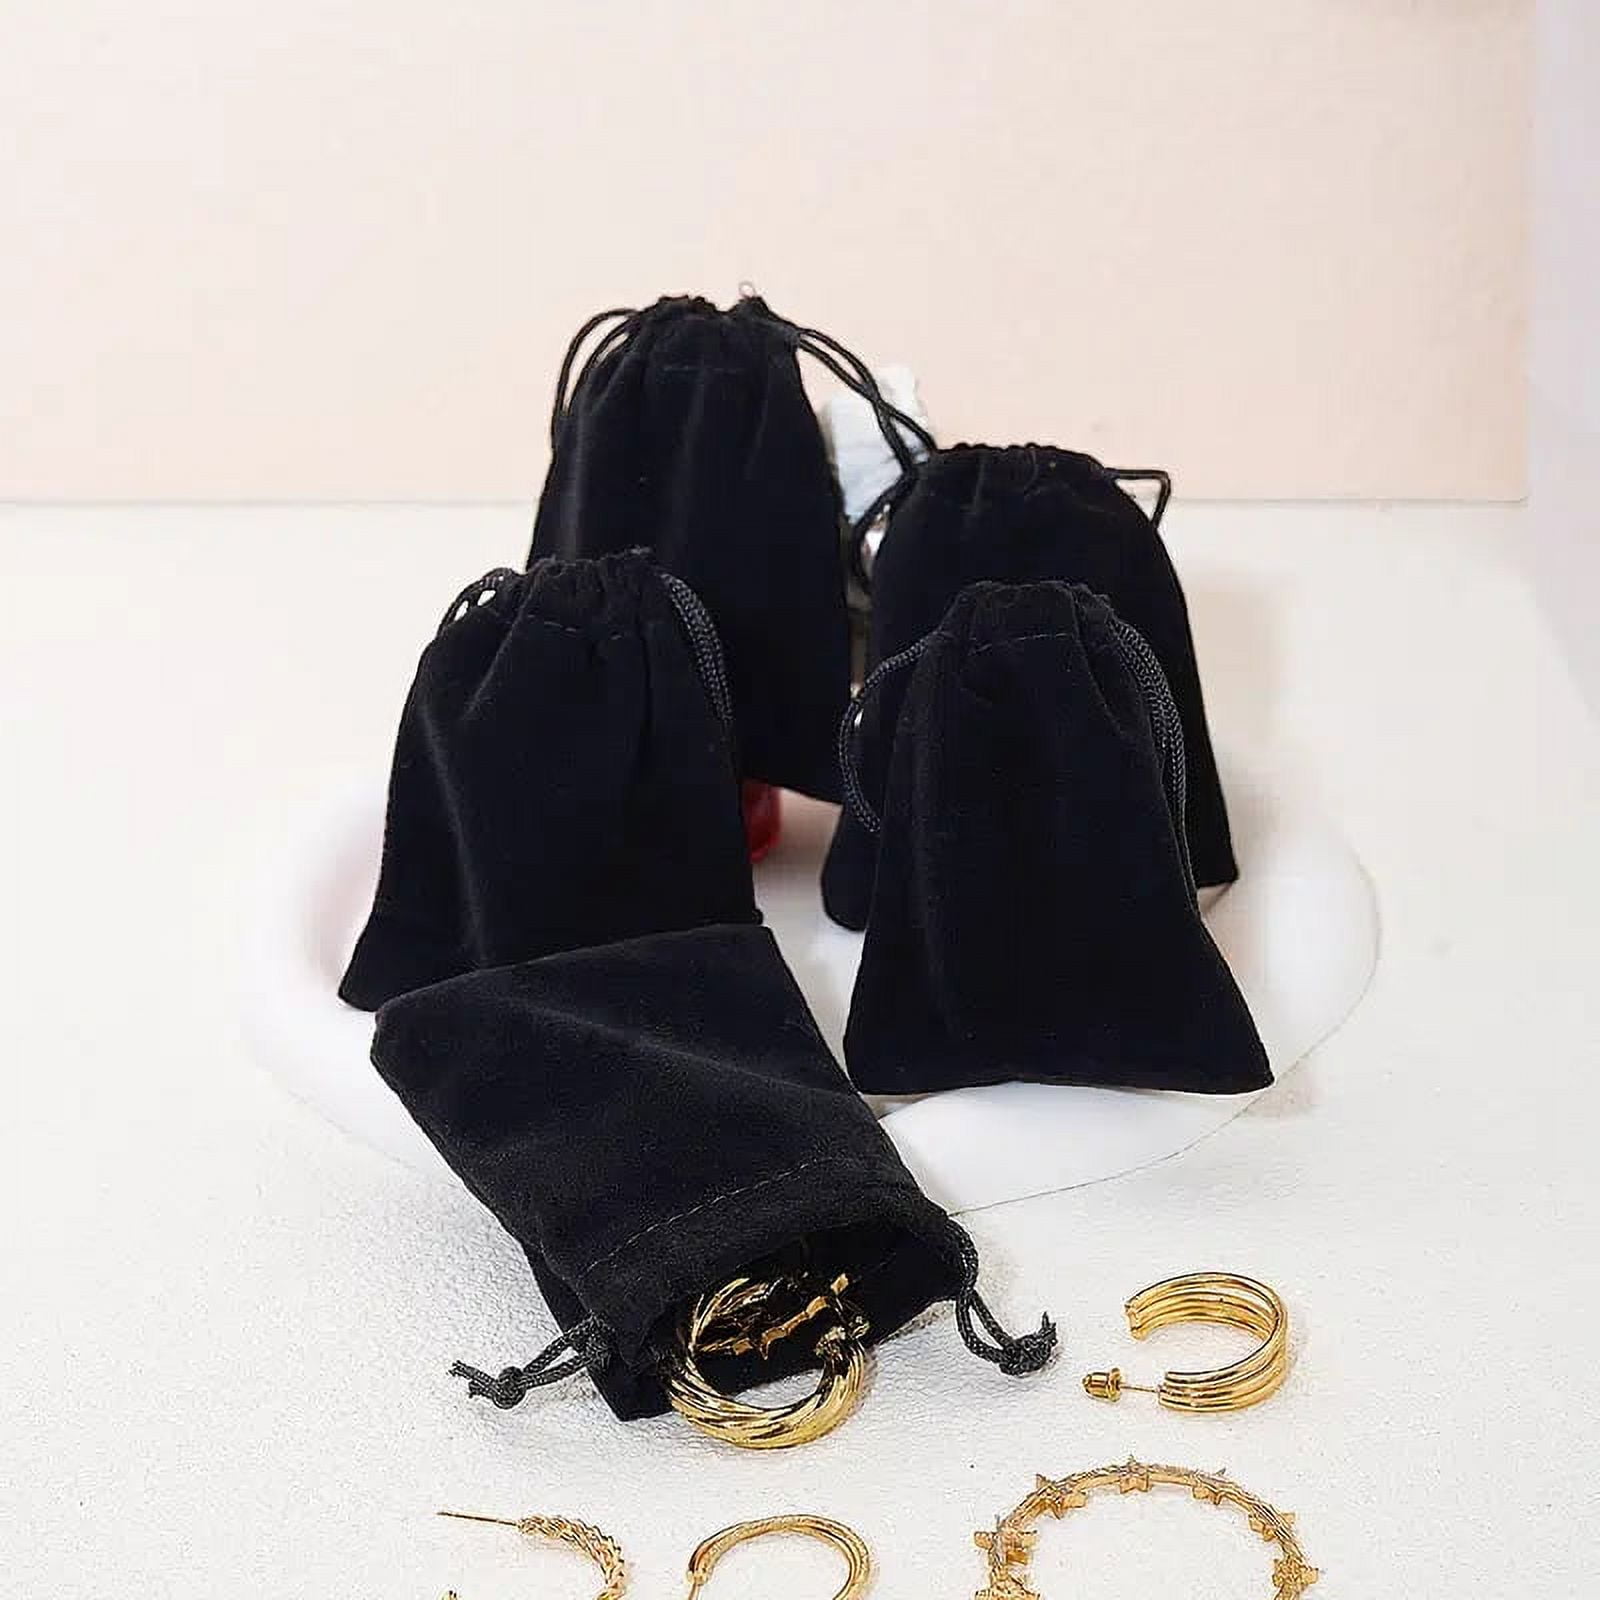 8 Pcs Black Velvet Bags with Drawstrings 7.87×9.72 Large Velvet Pouch  Velvet Jewelry Bags Big Wrapping Bags Drawstring Jewelry Pouches for  Wedding Favors Christmas Party Favors Birthday 